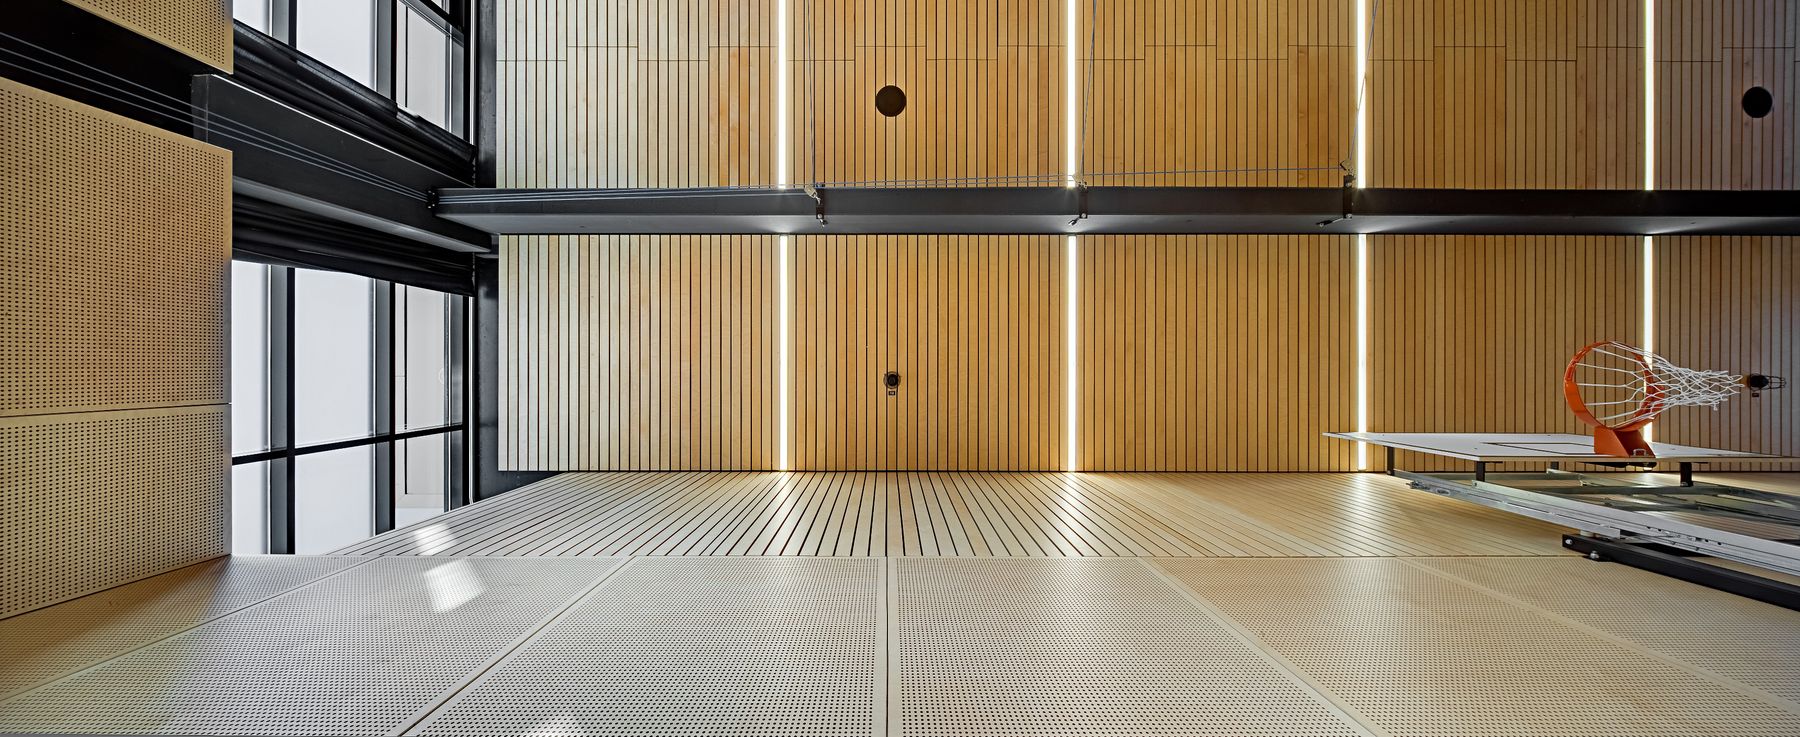 o k a i architektur design - 116 - HAK Turnsaal2018 - retterfoto